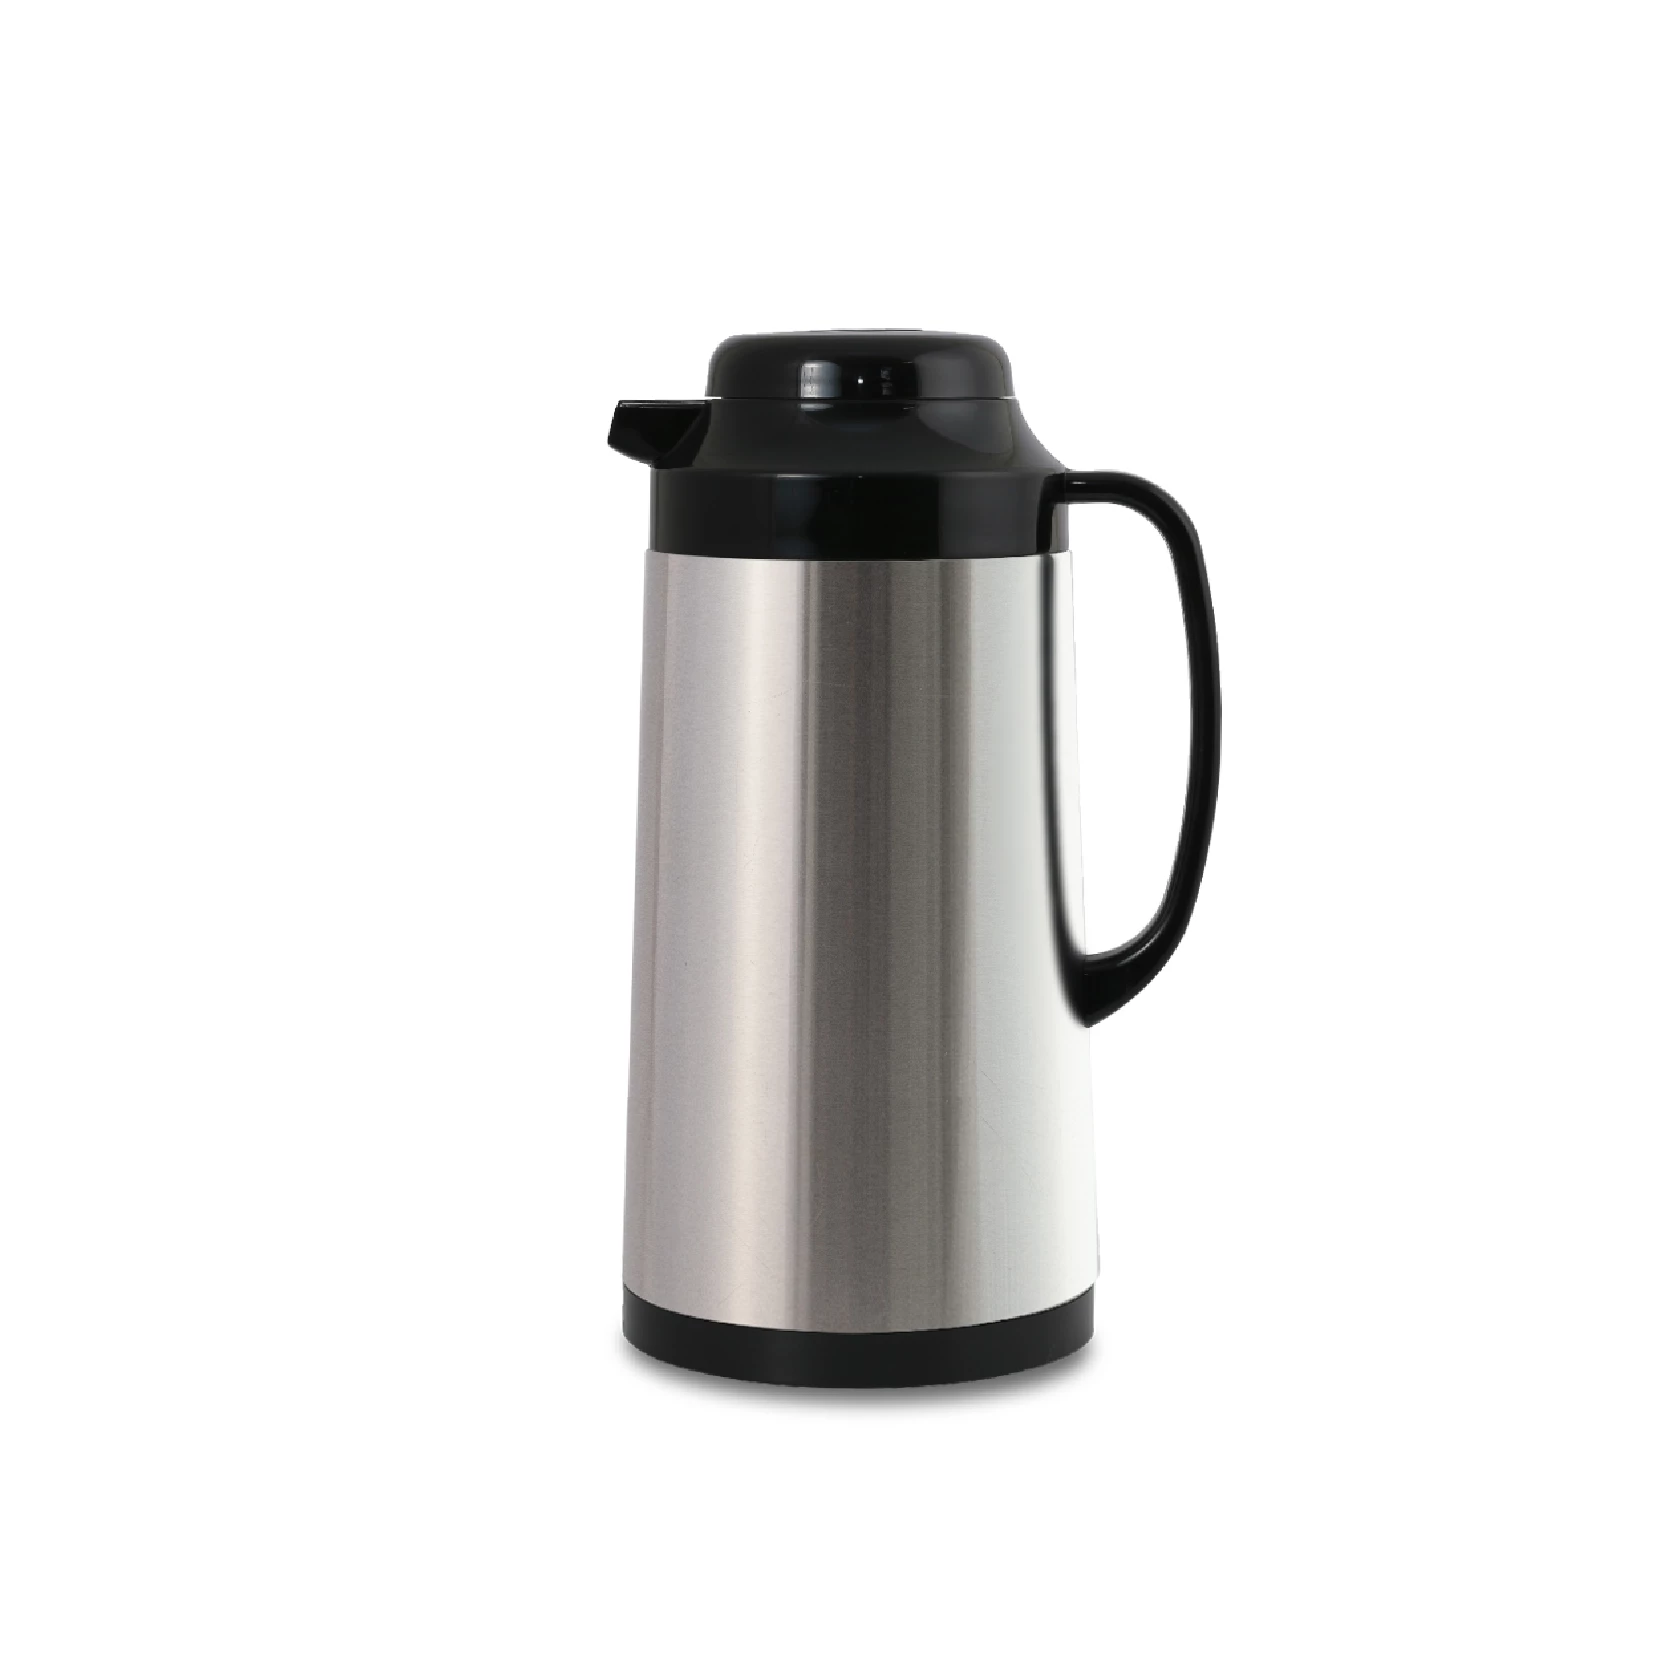 https://vacuumflask.rangdong.com.vn/static/Coffee-series-3/av3.jpg